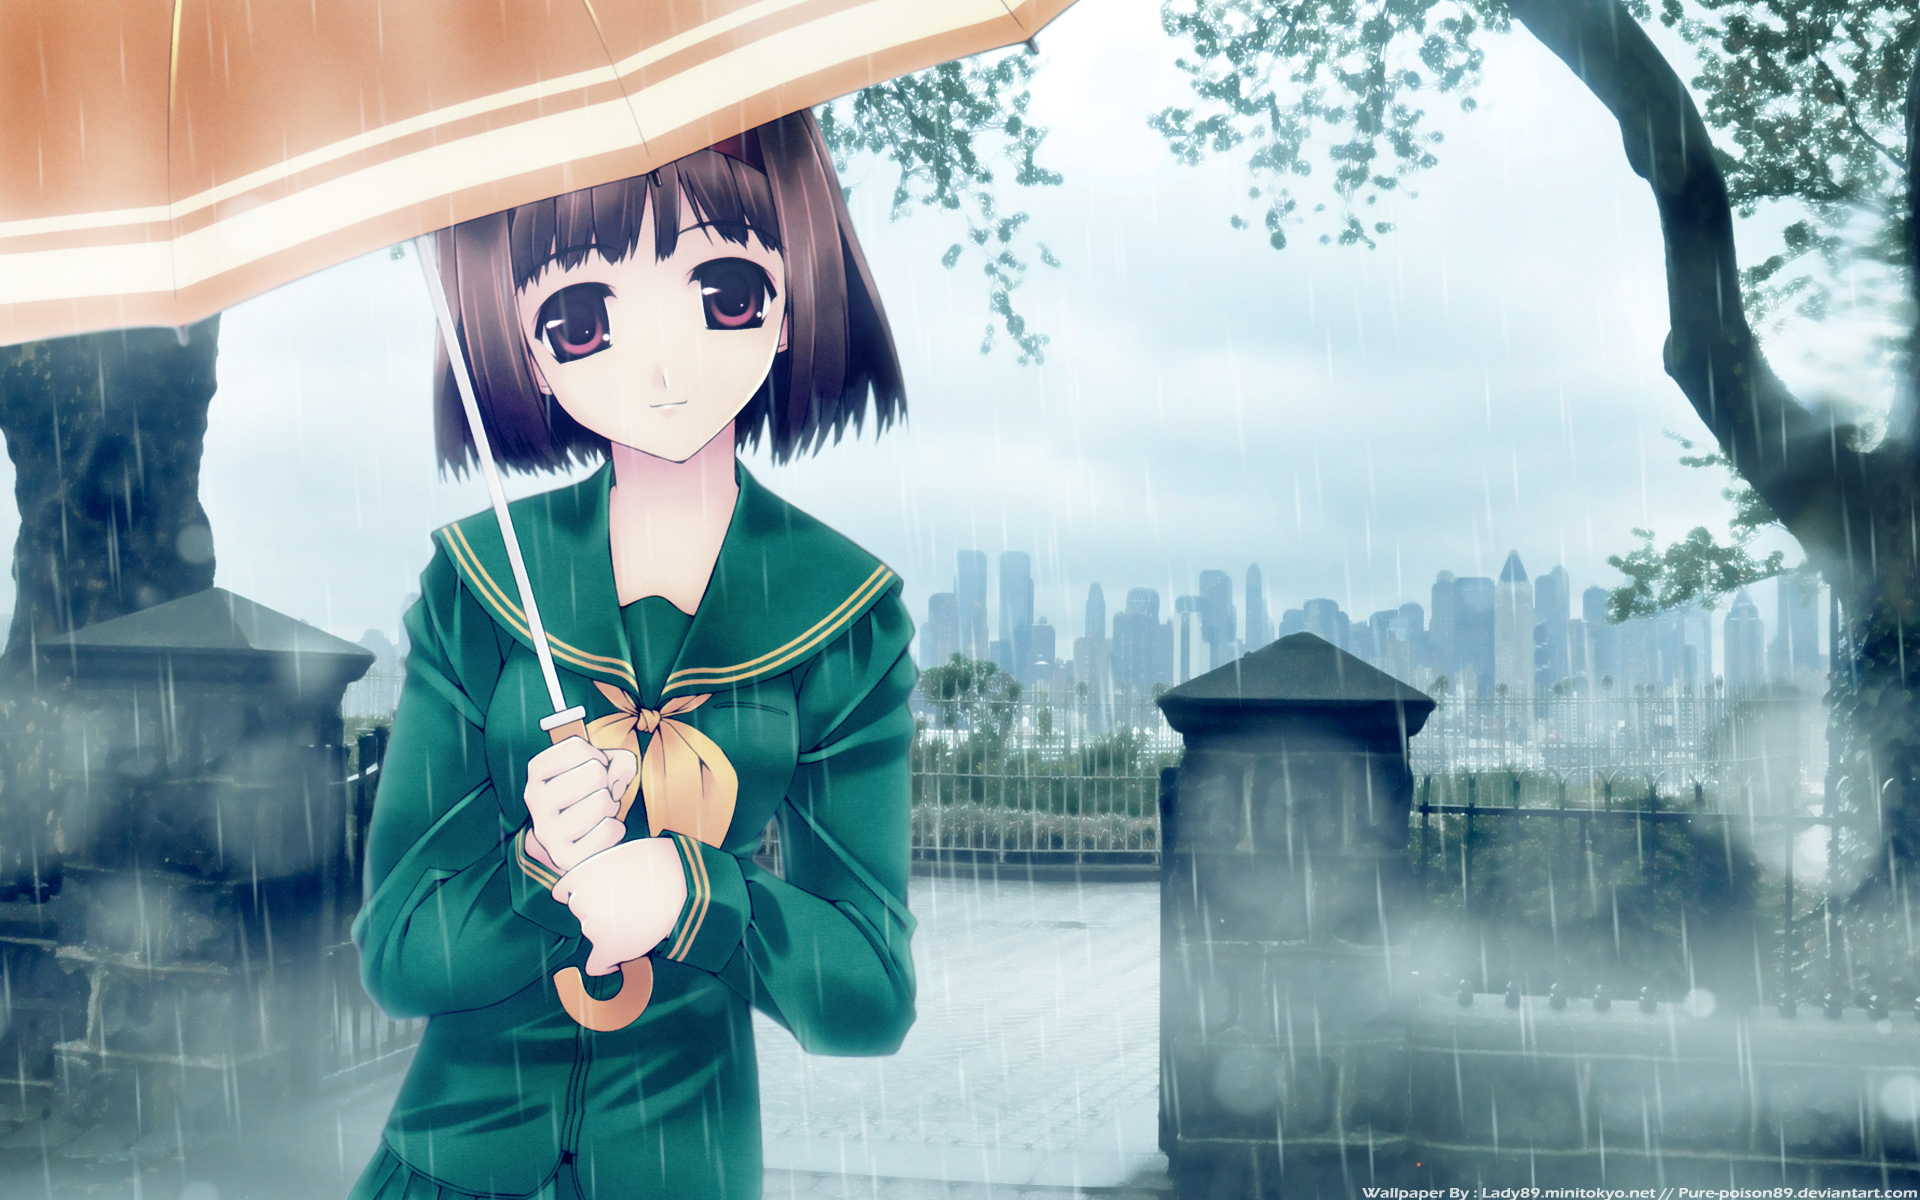 Anime Girl Standing in Rain inside Torii 5K Wallpaper, HD Anime 4K  Wallpapers, Images and Background - Wallpapers Den